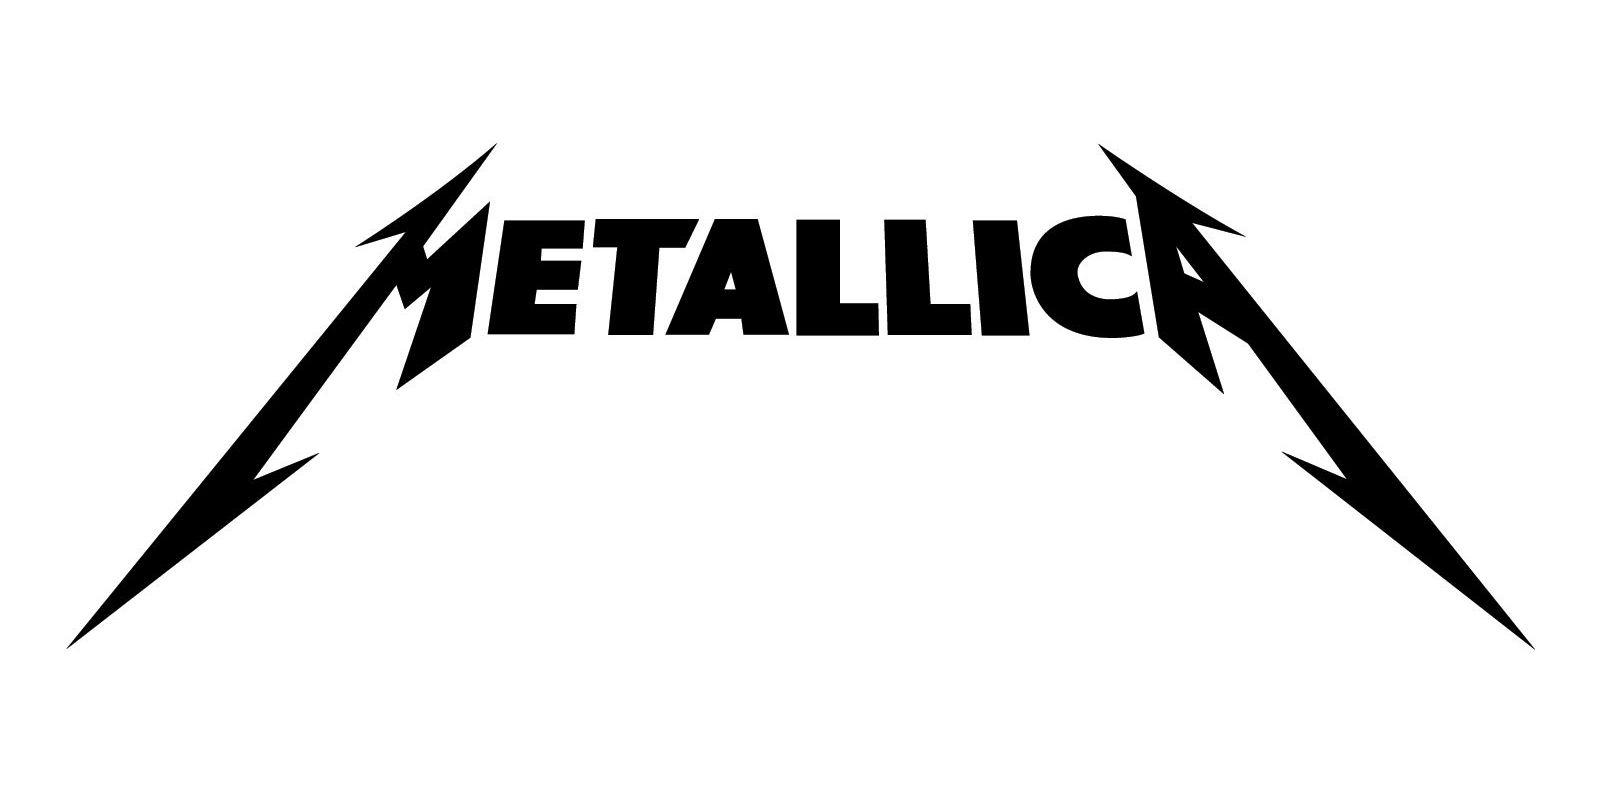 Metallica Scary Guy Logo - Metallica Logo, Metallica Symbol Meaning, History and Evolution